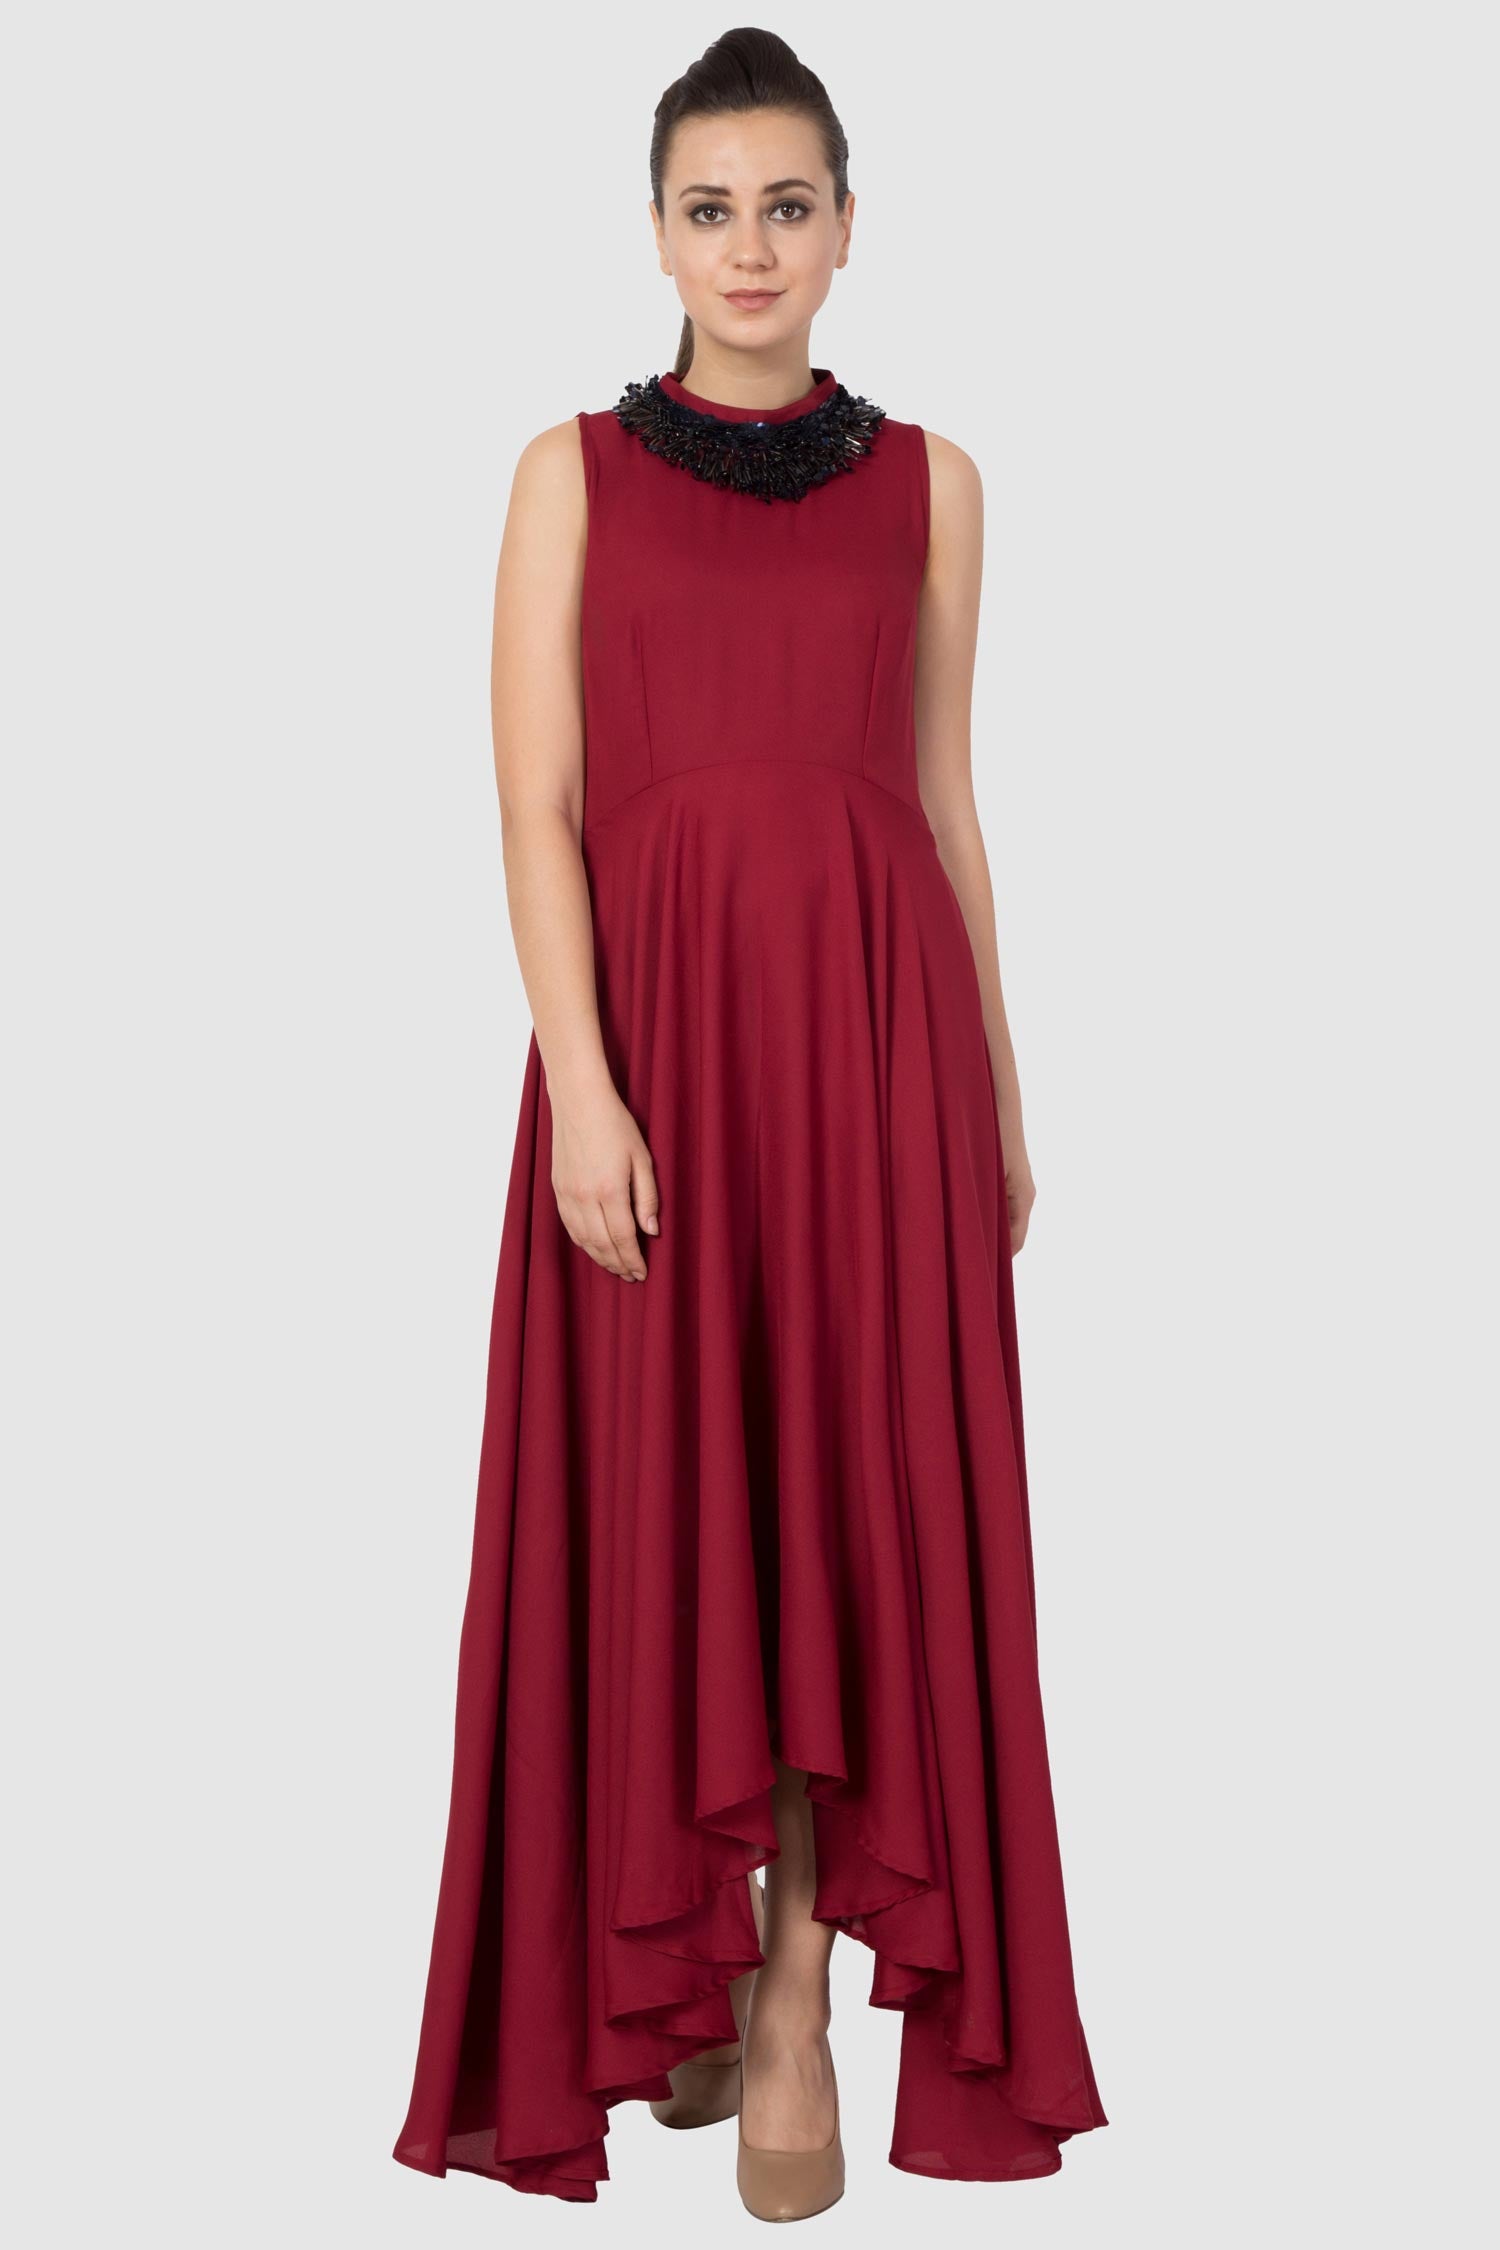 Wine Red Embroidered Handkerchief Dress